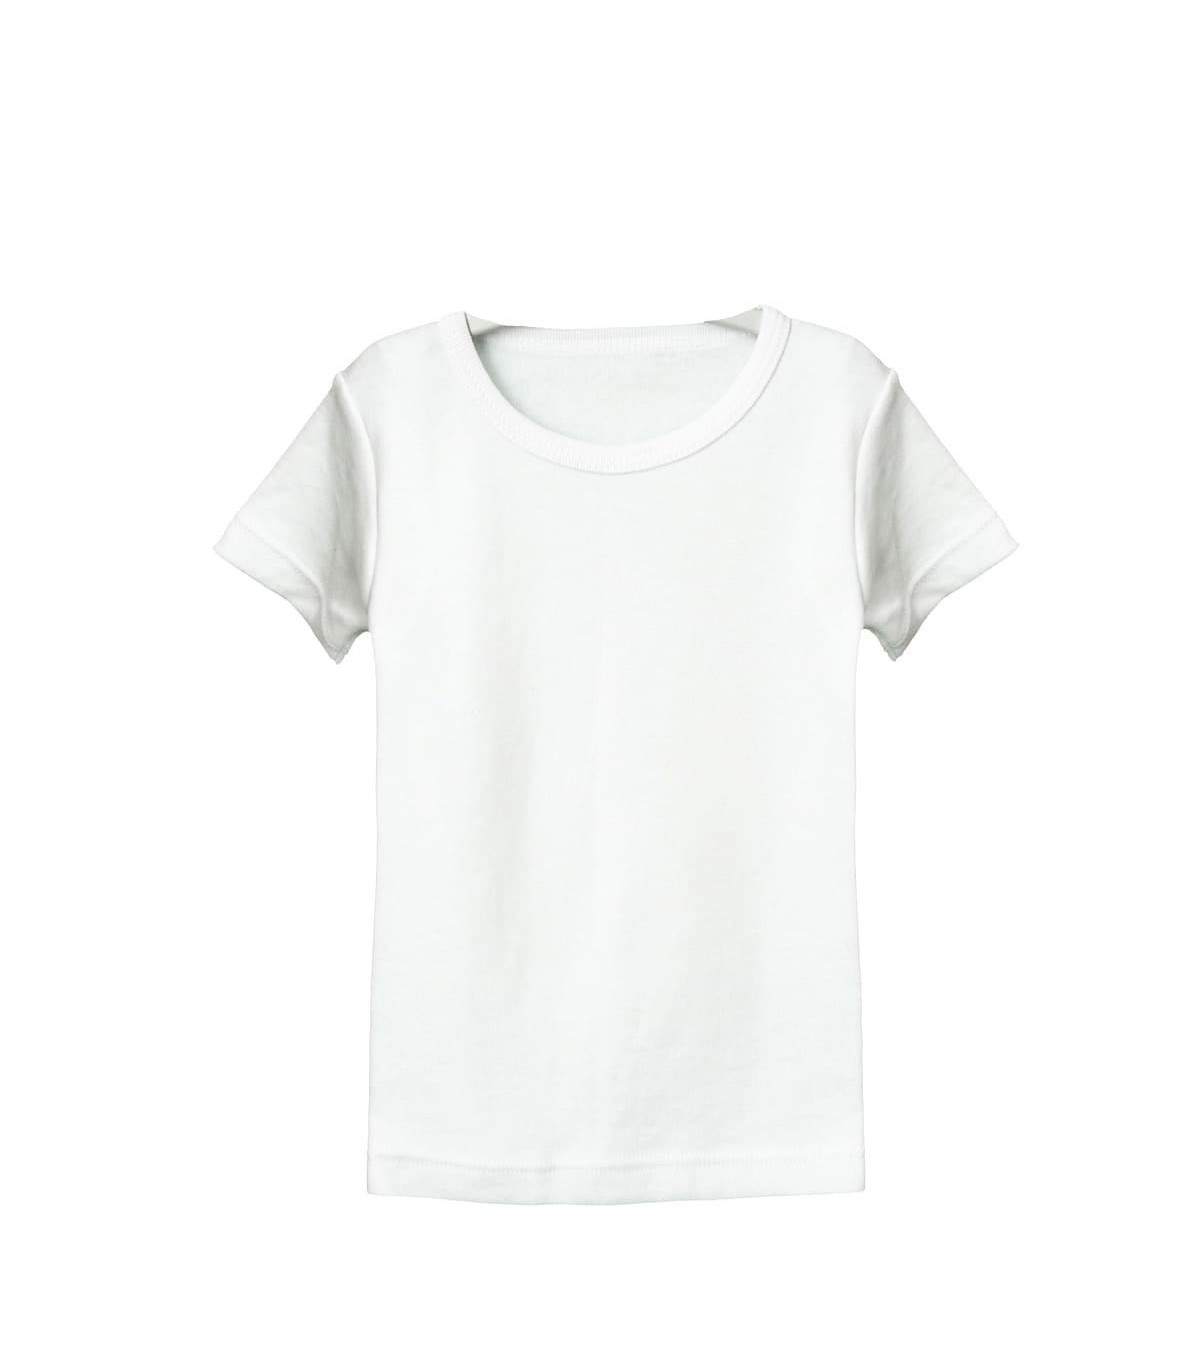 https://merceriainma.com/3871-superlarge_default/camiseta-interior-nino-manga-corta-felpa-calamaro.jpg